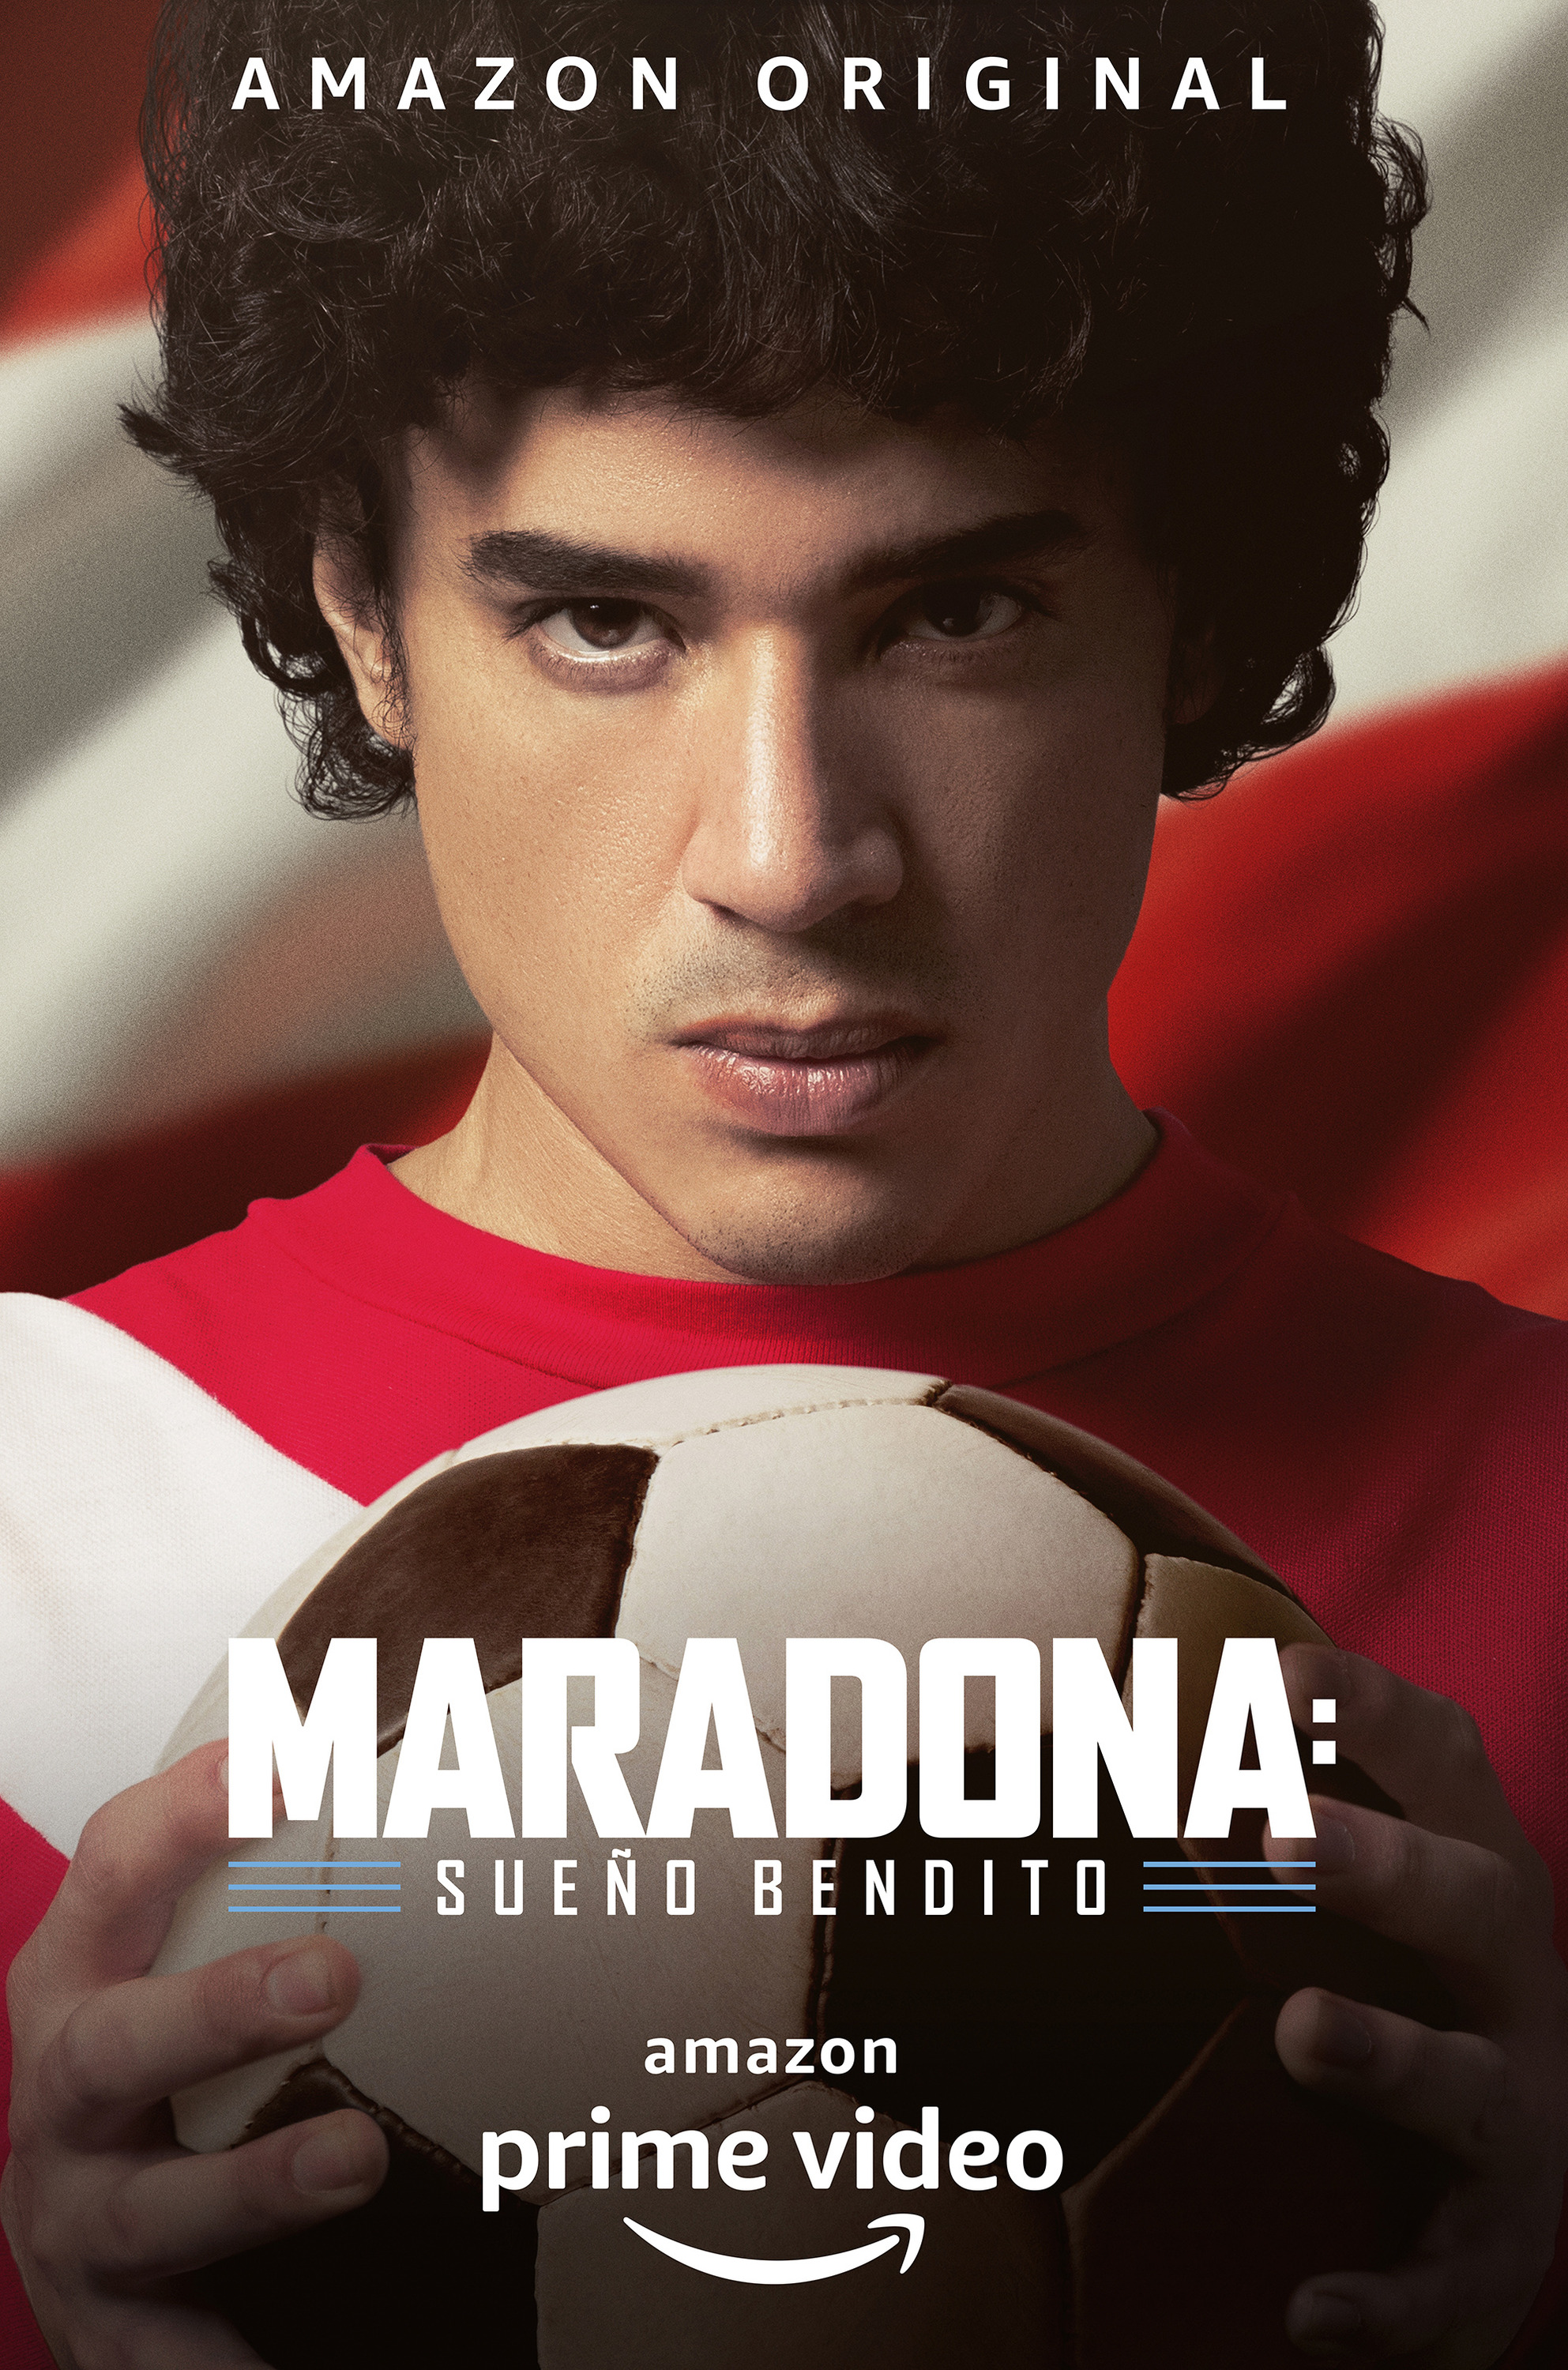 Mega Sized Movie Poster Image for Maradona, sueño bendito (#12 of 21)